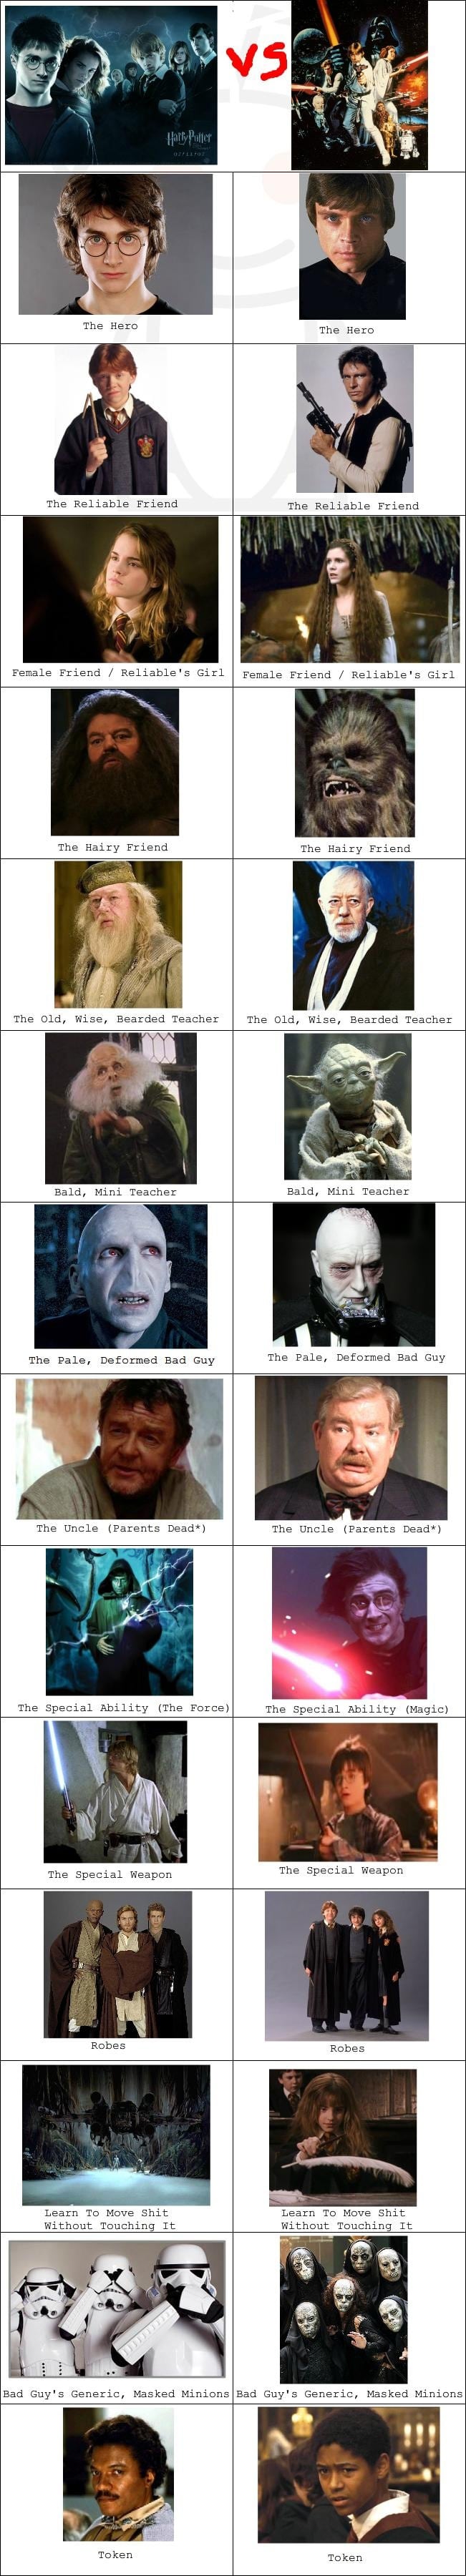 Harry Potter vs Star Wars